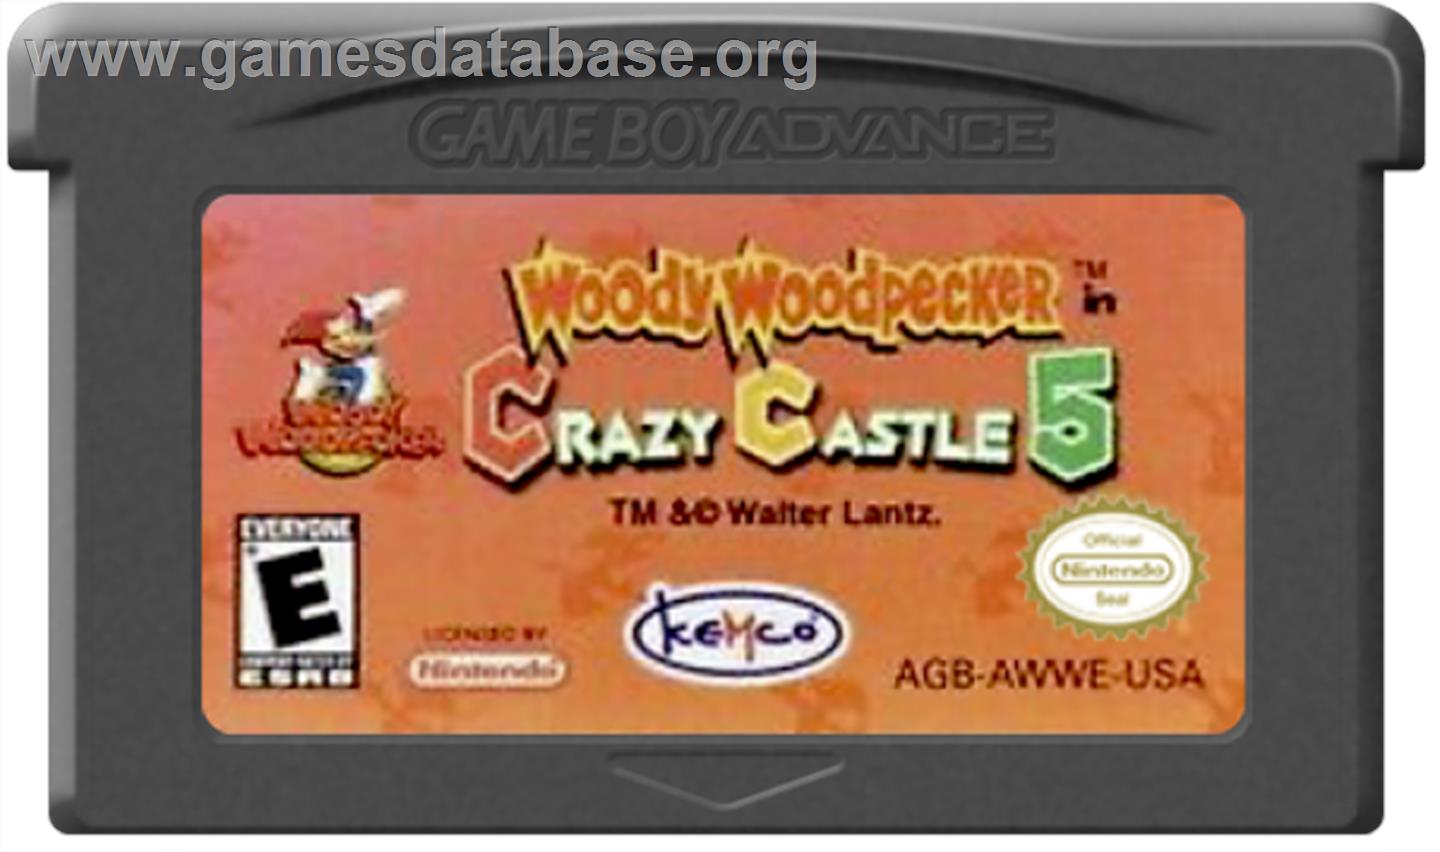 Woody Woodpecker in Crazy Castle 5 - Nintendo Game Boy Advance - Artwork - Cartridge